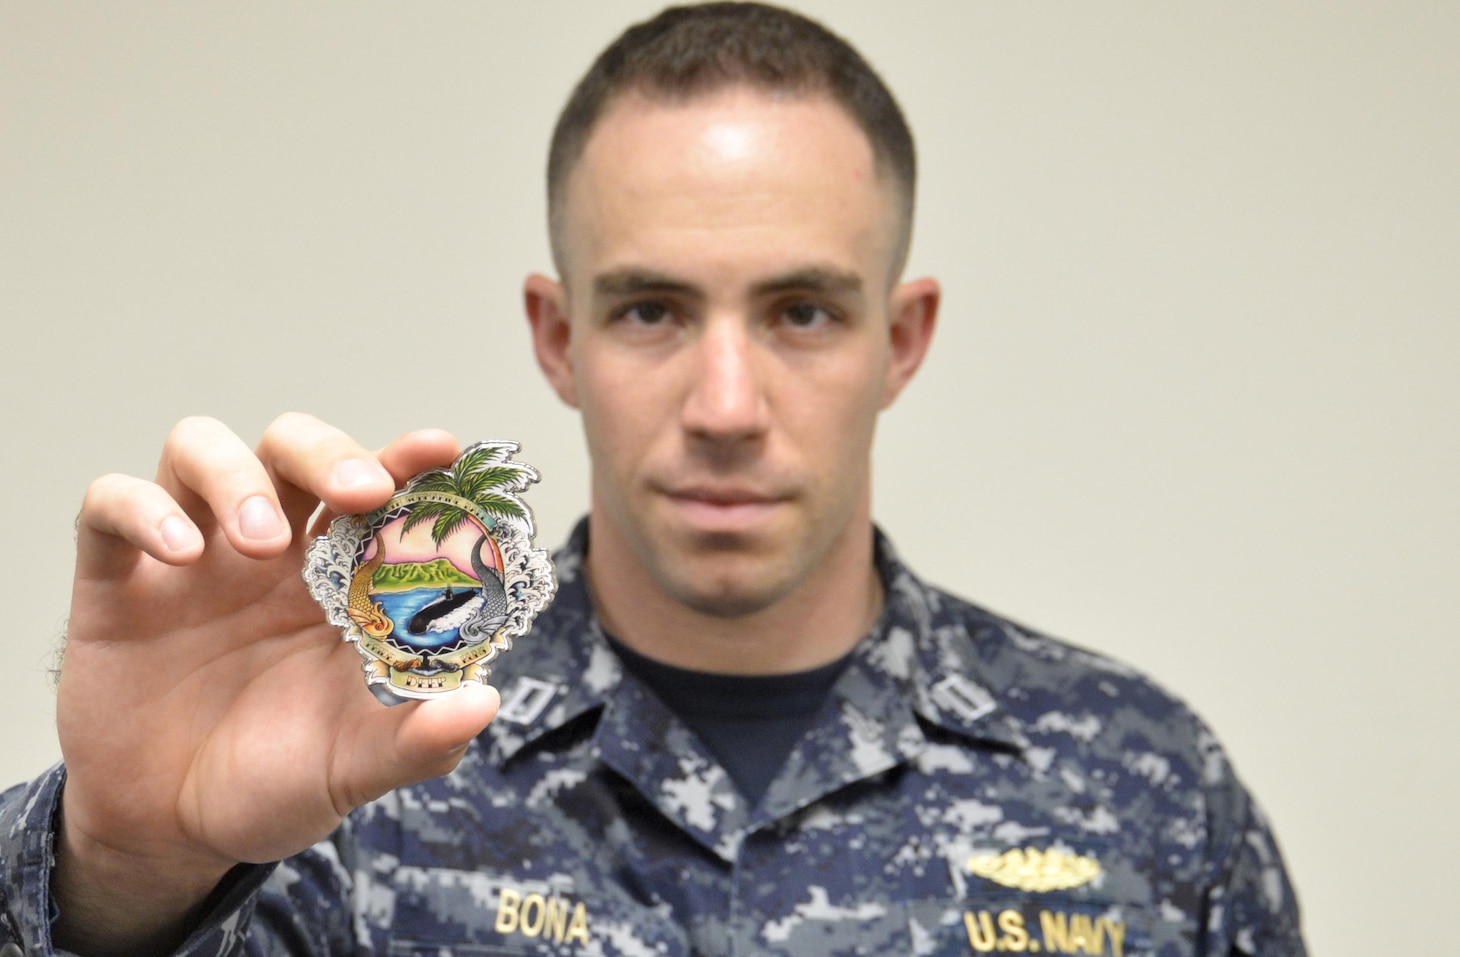 116th Submarine Ball Coins Bear Distinct Influence > Commander